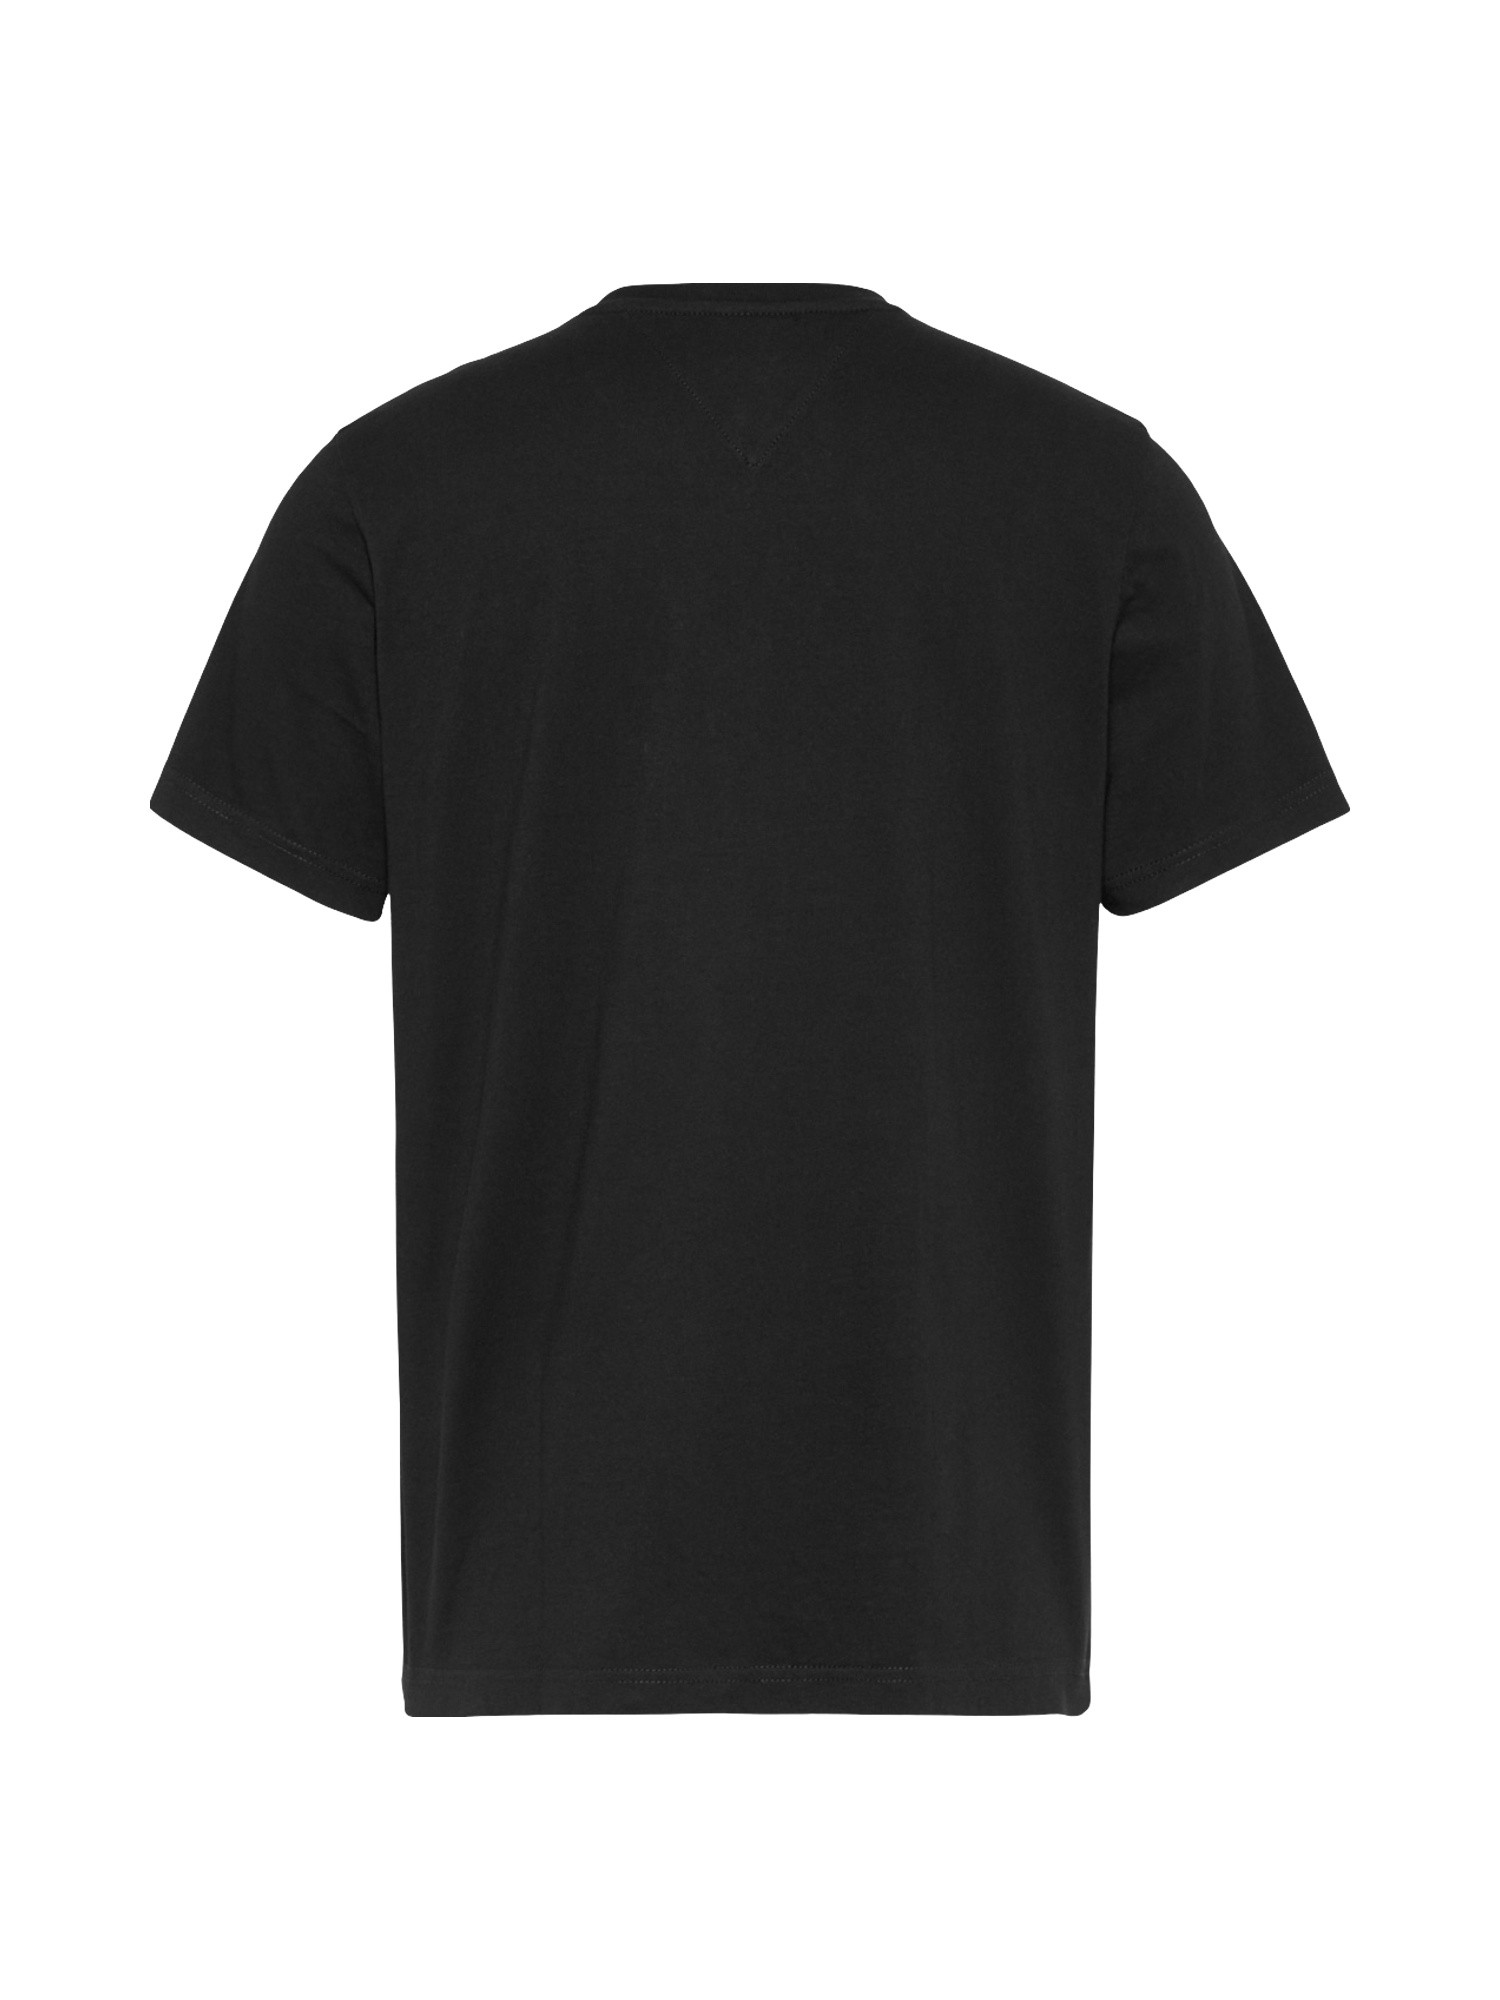 T-shirt with logo, Black, large image number 1